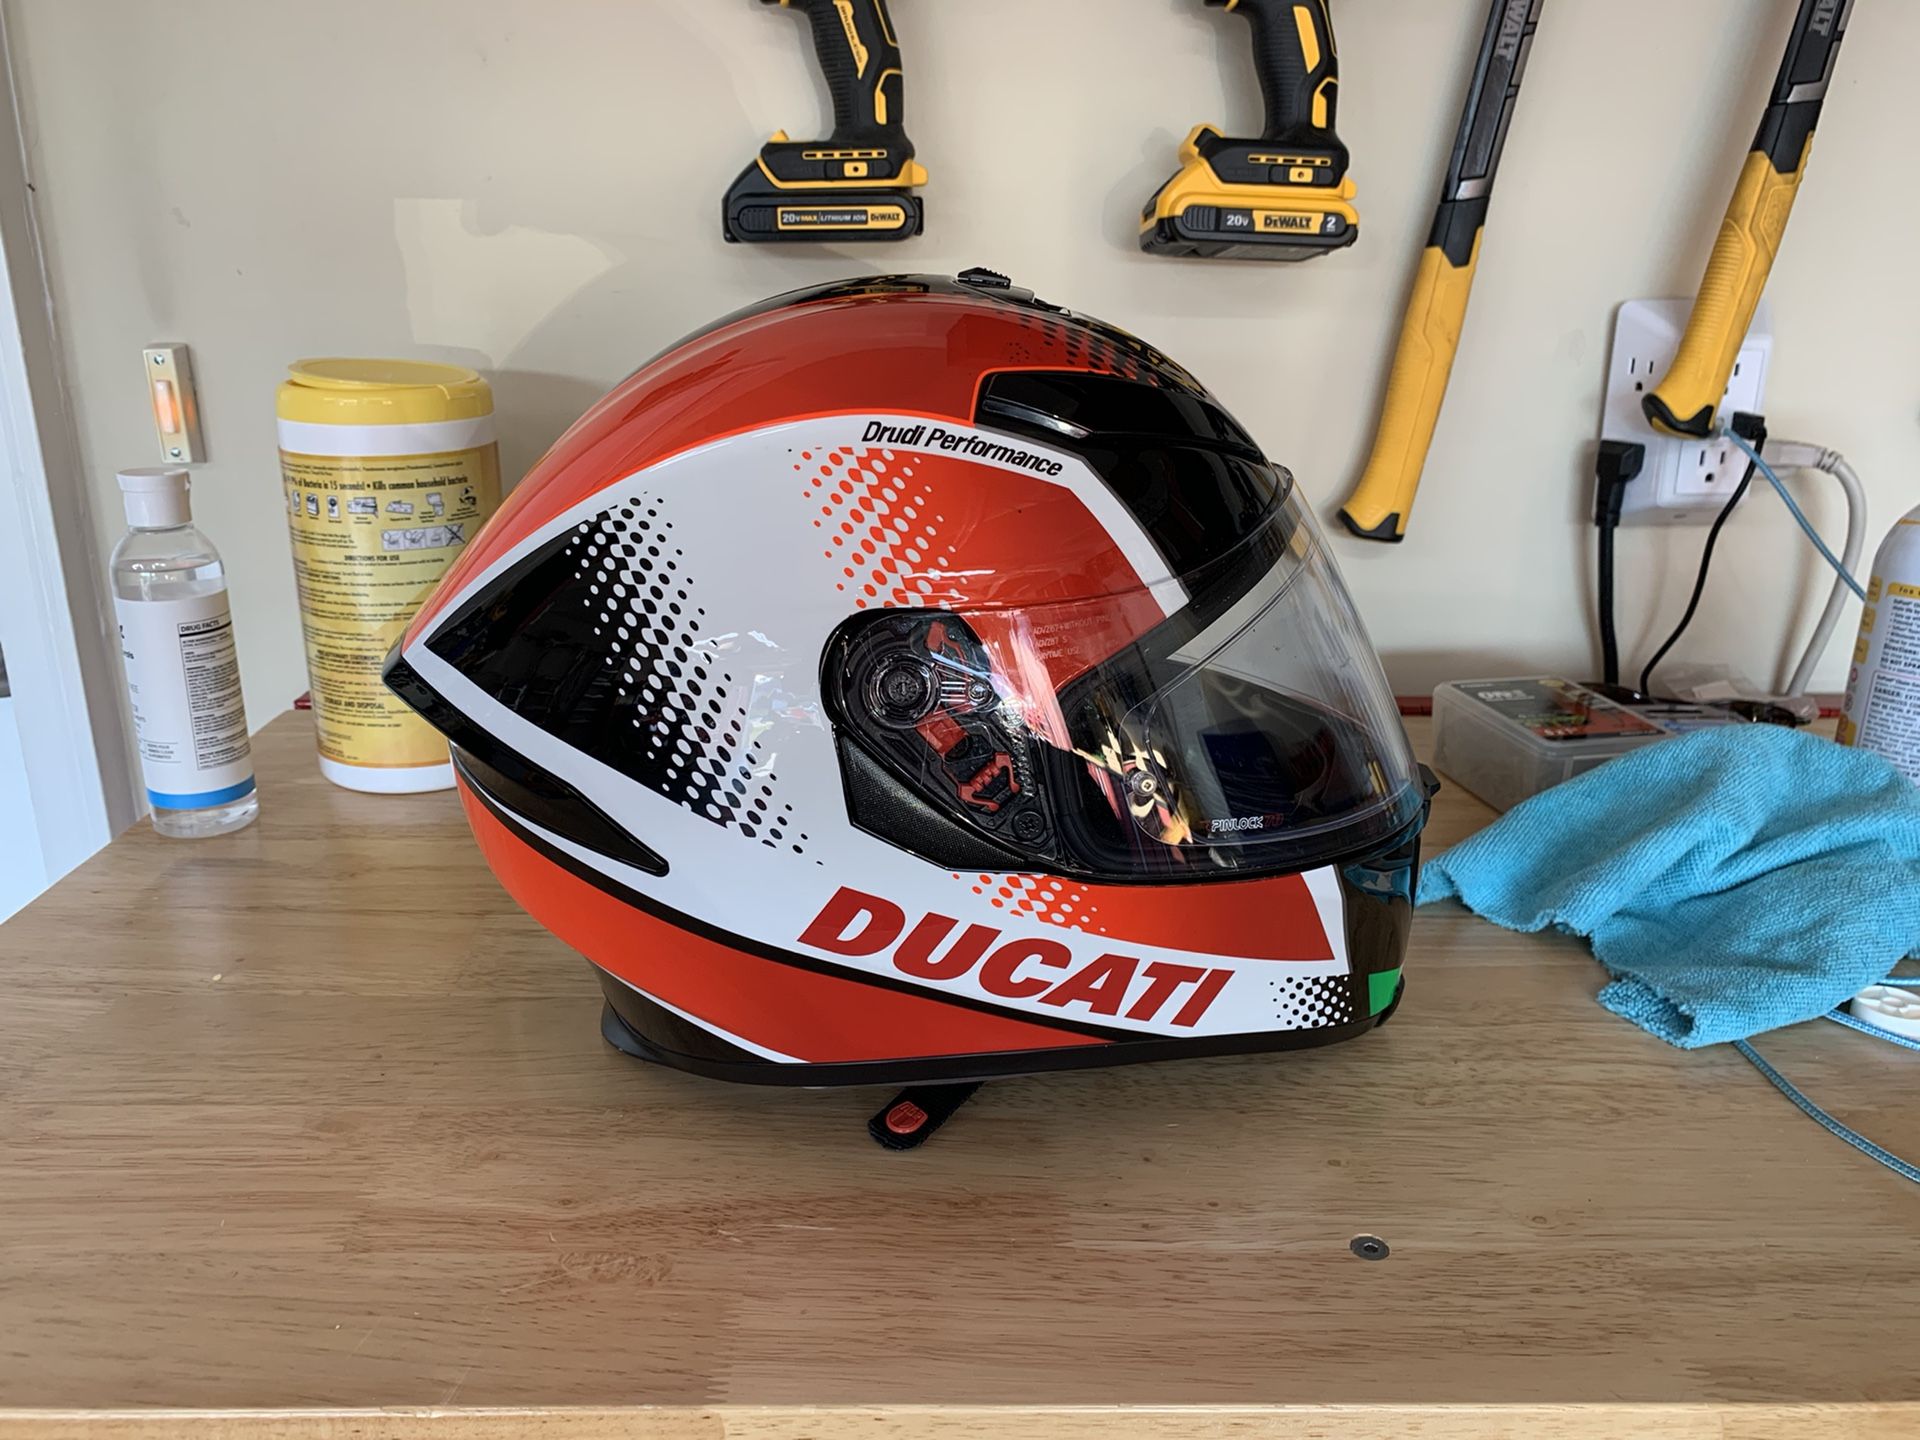 Ducati Helmet with drop down visor